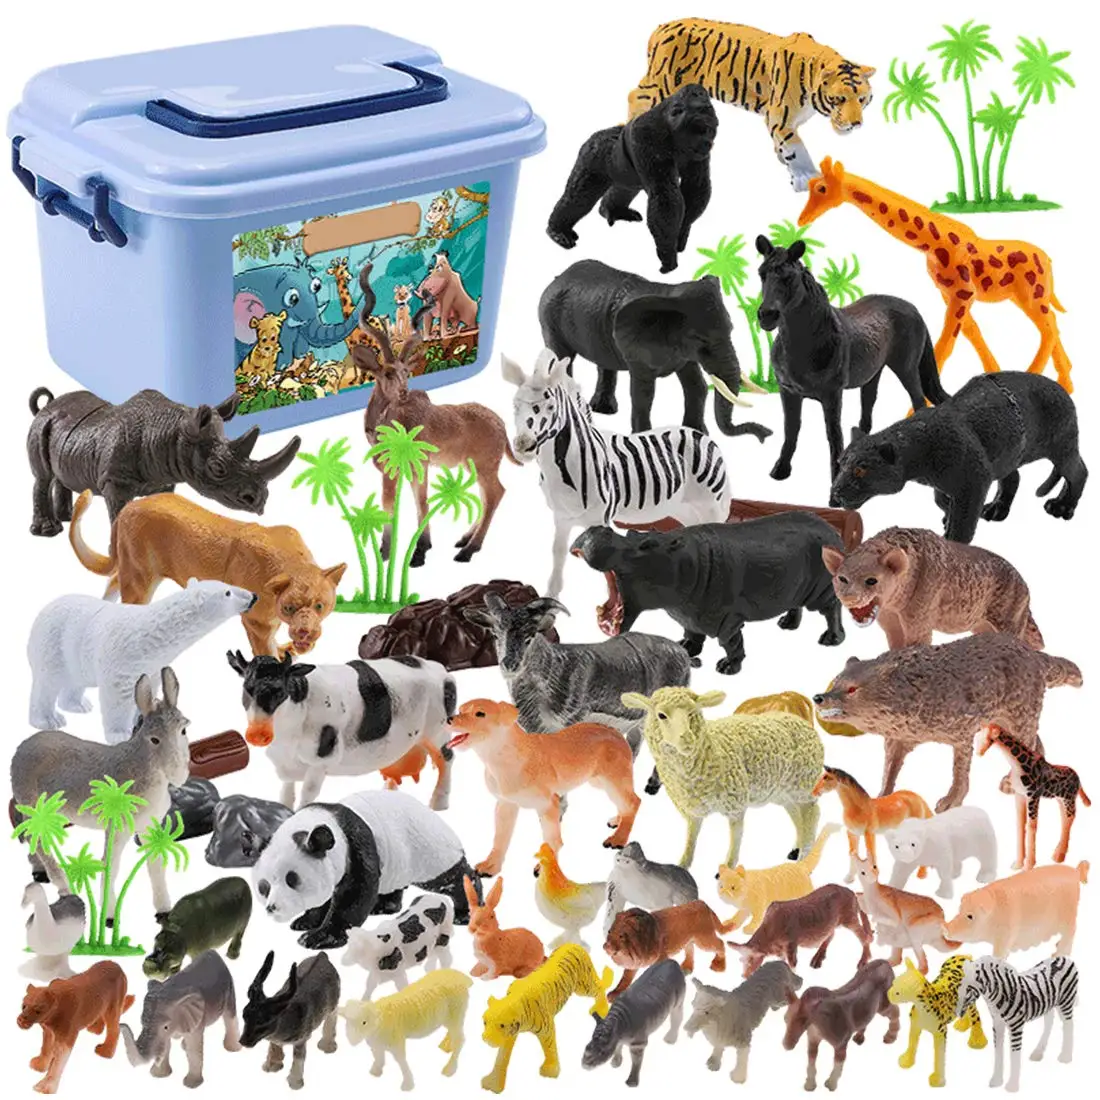 box of animals toys